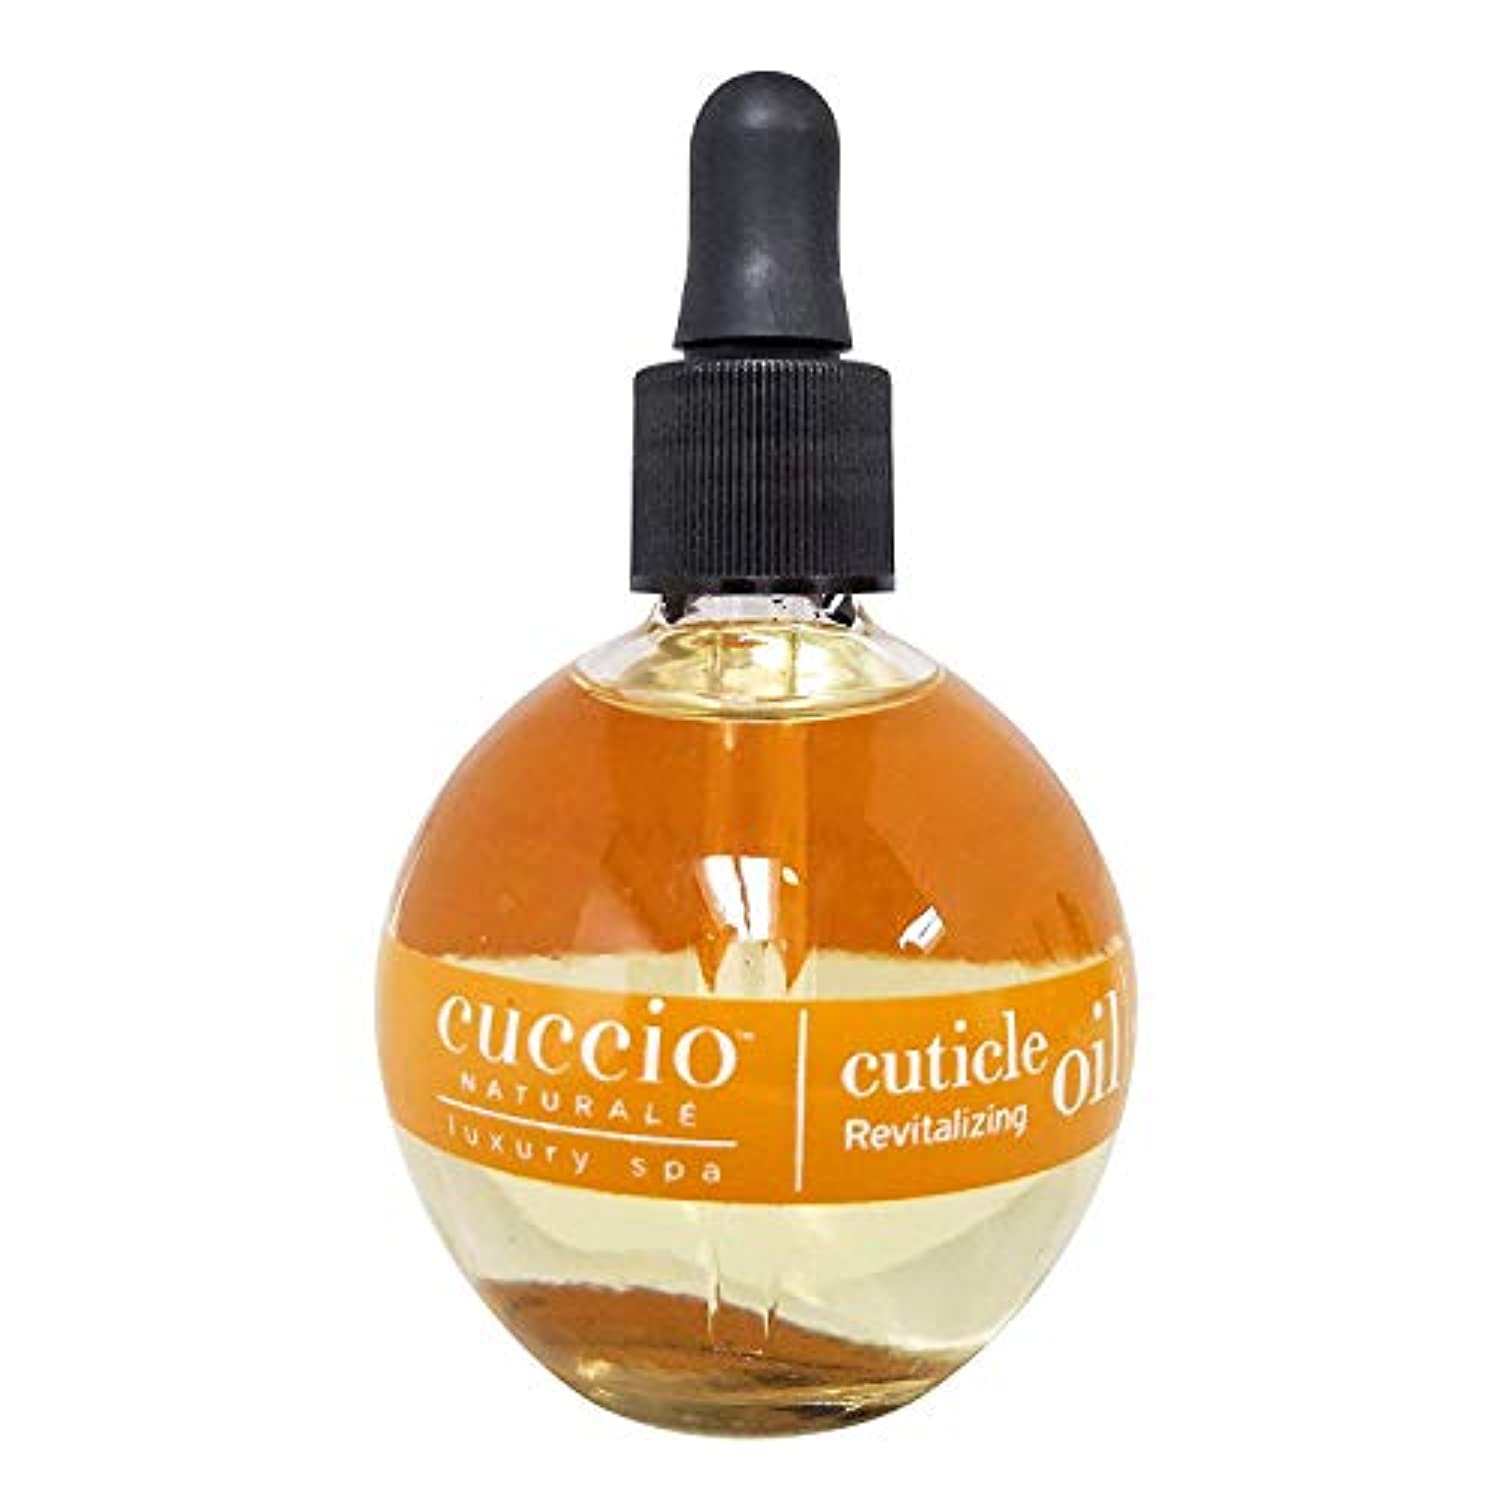 Cuccio Cuticle Oil 75ml Beautiful Fragrant For Acrylic UV Gel Polish Natural Nail Treatment - Choose Your Fragrant (Cuccio Oil Milk & Honey 2.5 fl. oz. (73mL)) by Cuccio